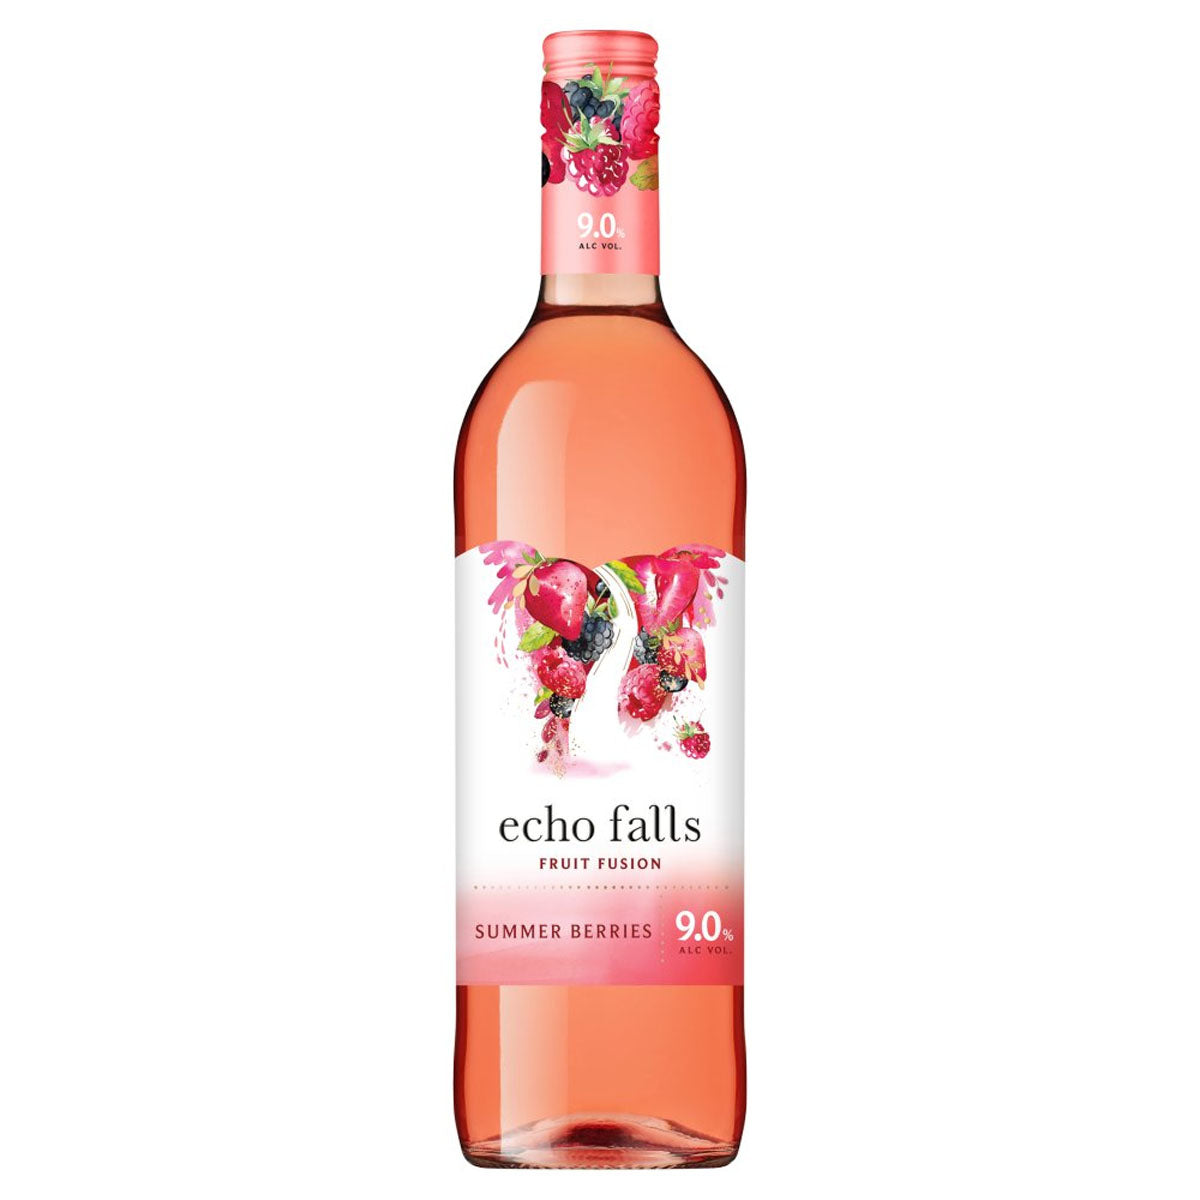 Echo Falls - Summer Berries Fruit Fusion (9.0% ABV) 750ml wine.